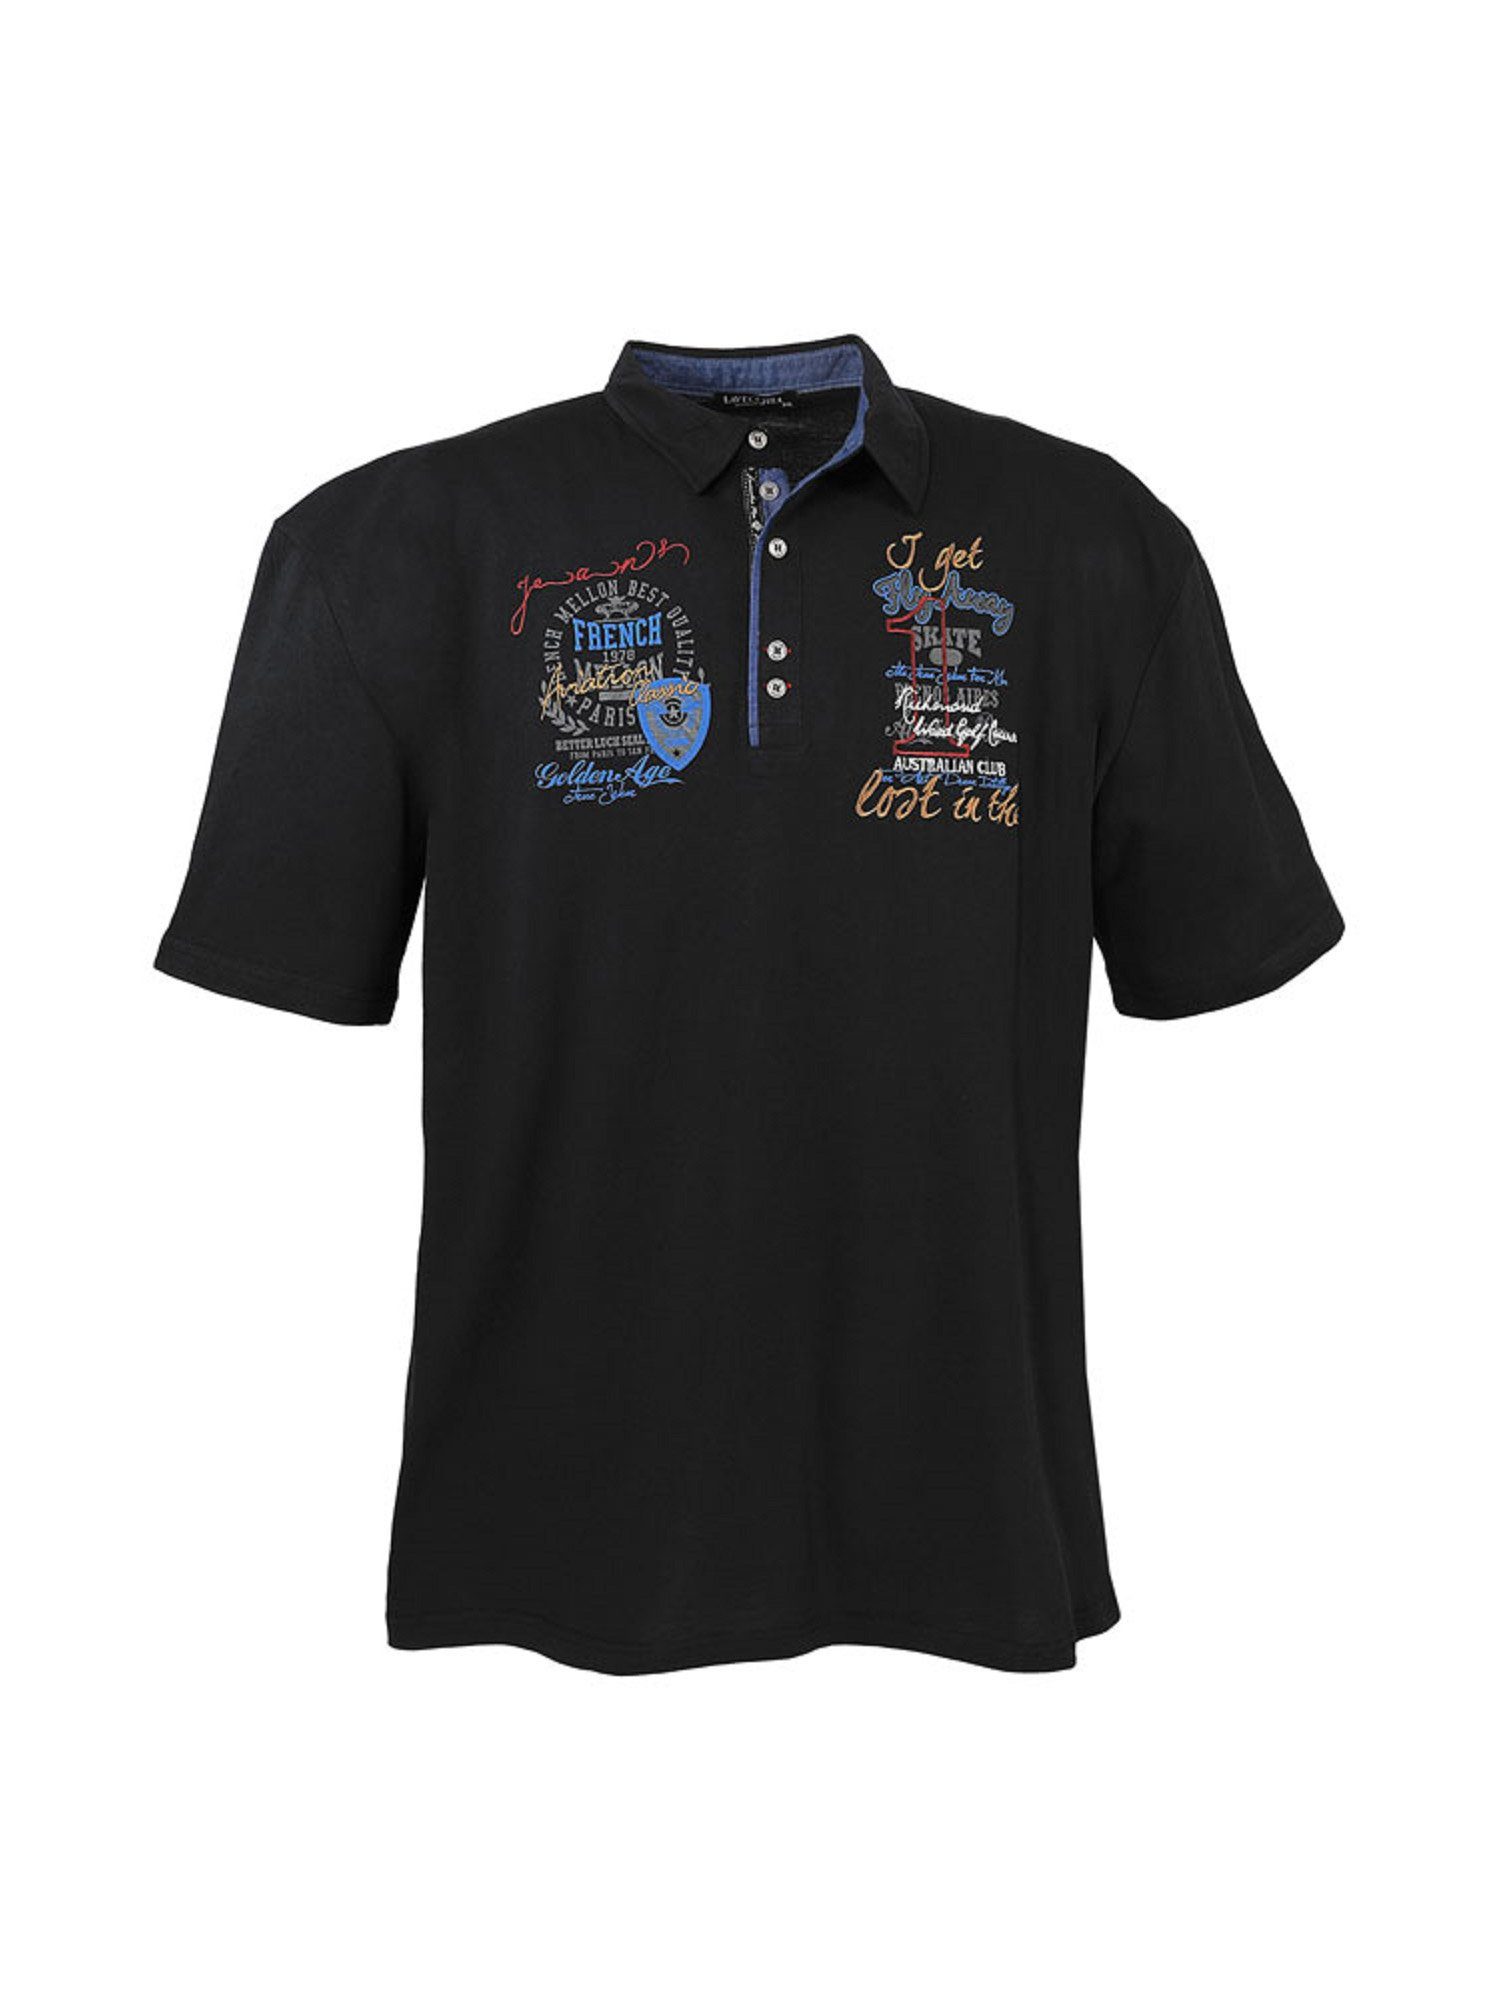 Lavecchia Polo Poloshirt Herren Shirt Übergrößen Shirt schwarz Herren Polo LV-3101